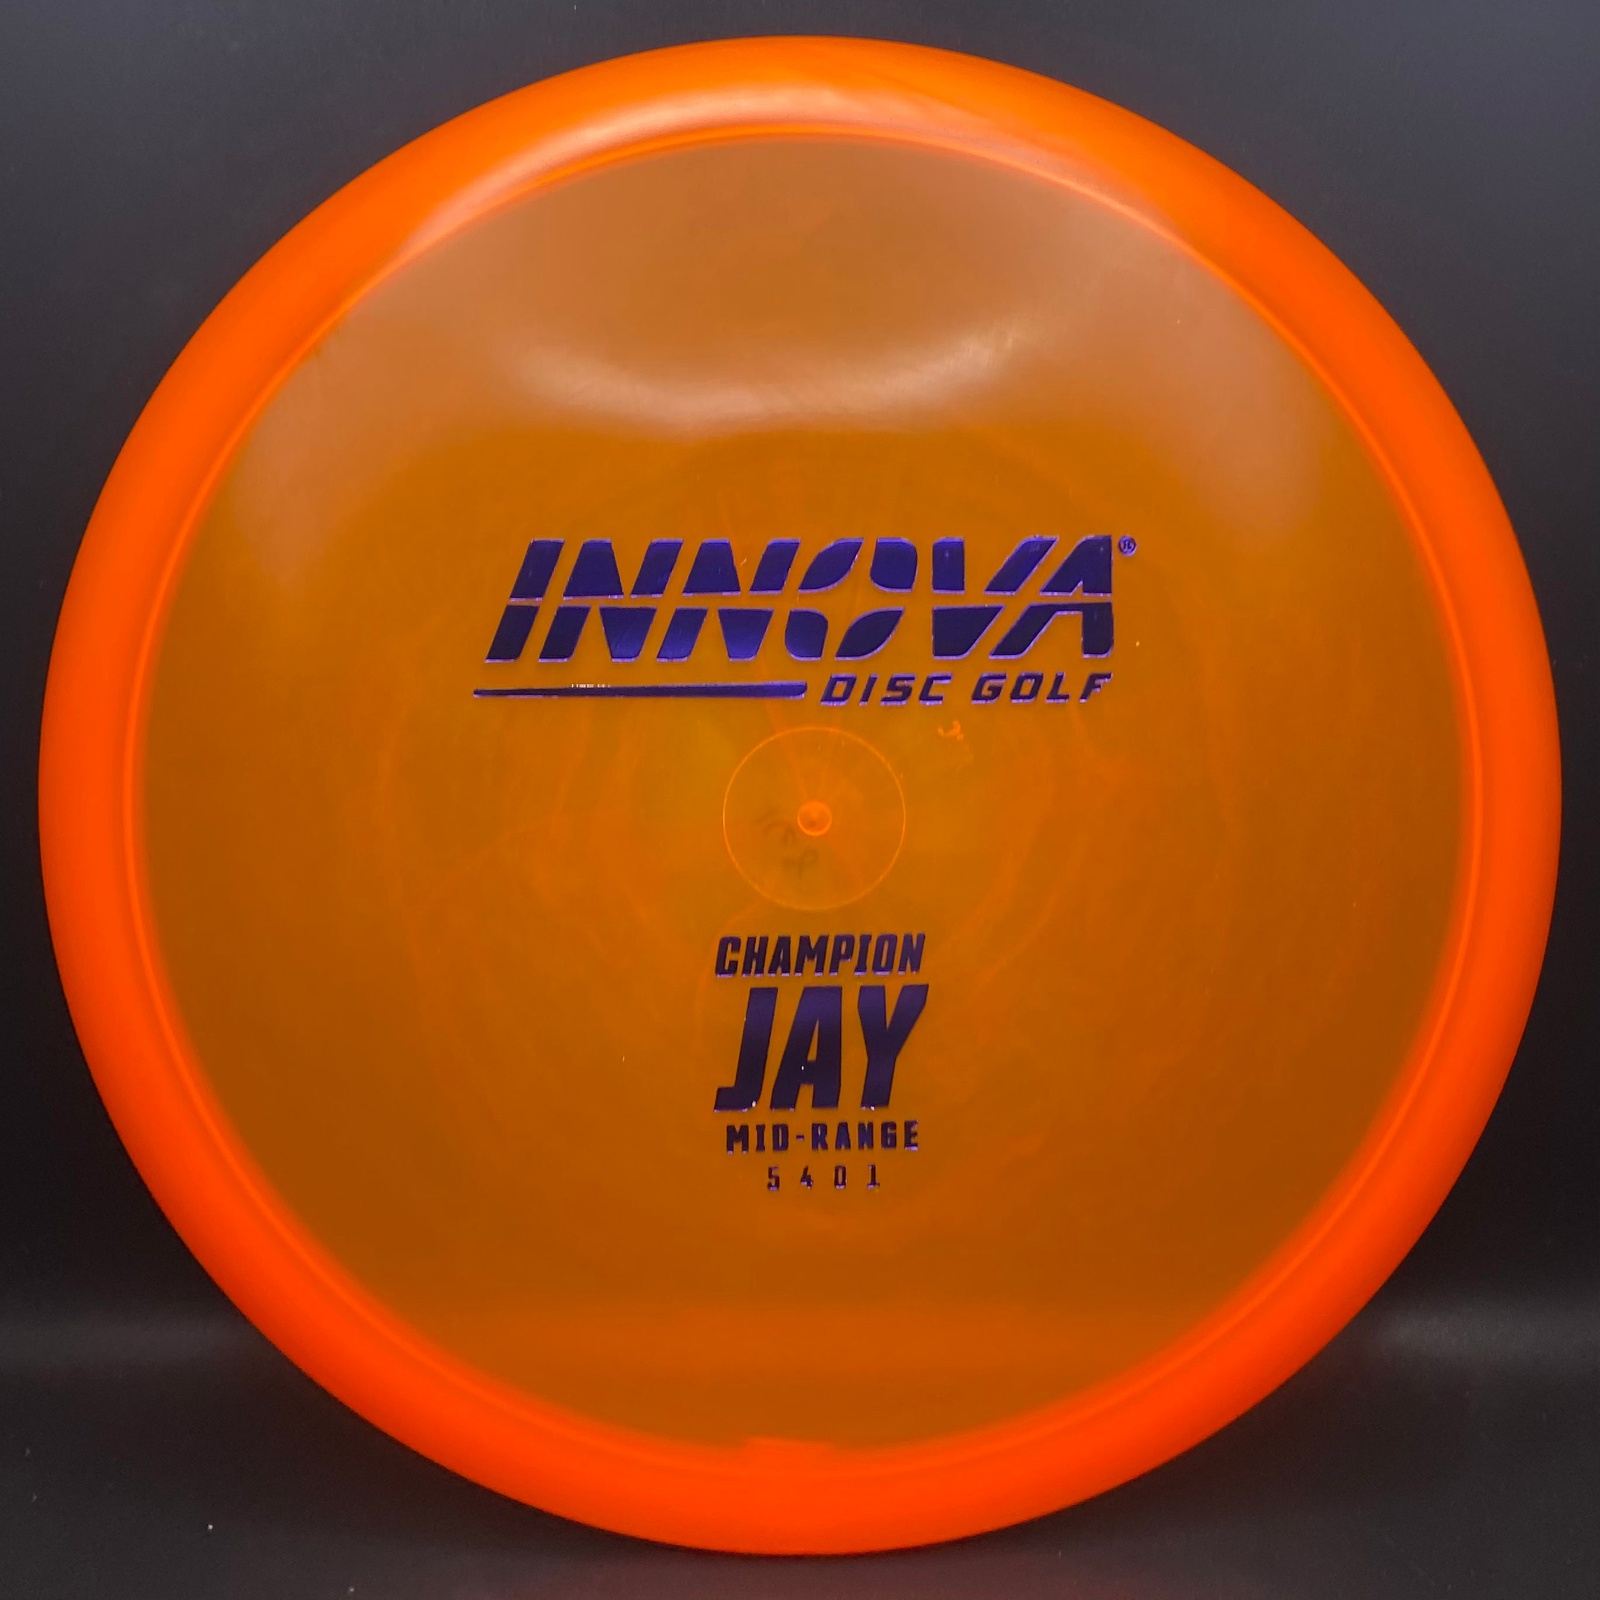 Champion Jay - Mid Range Innova